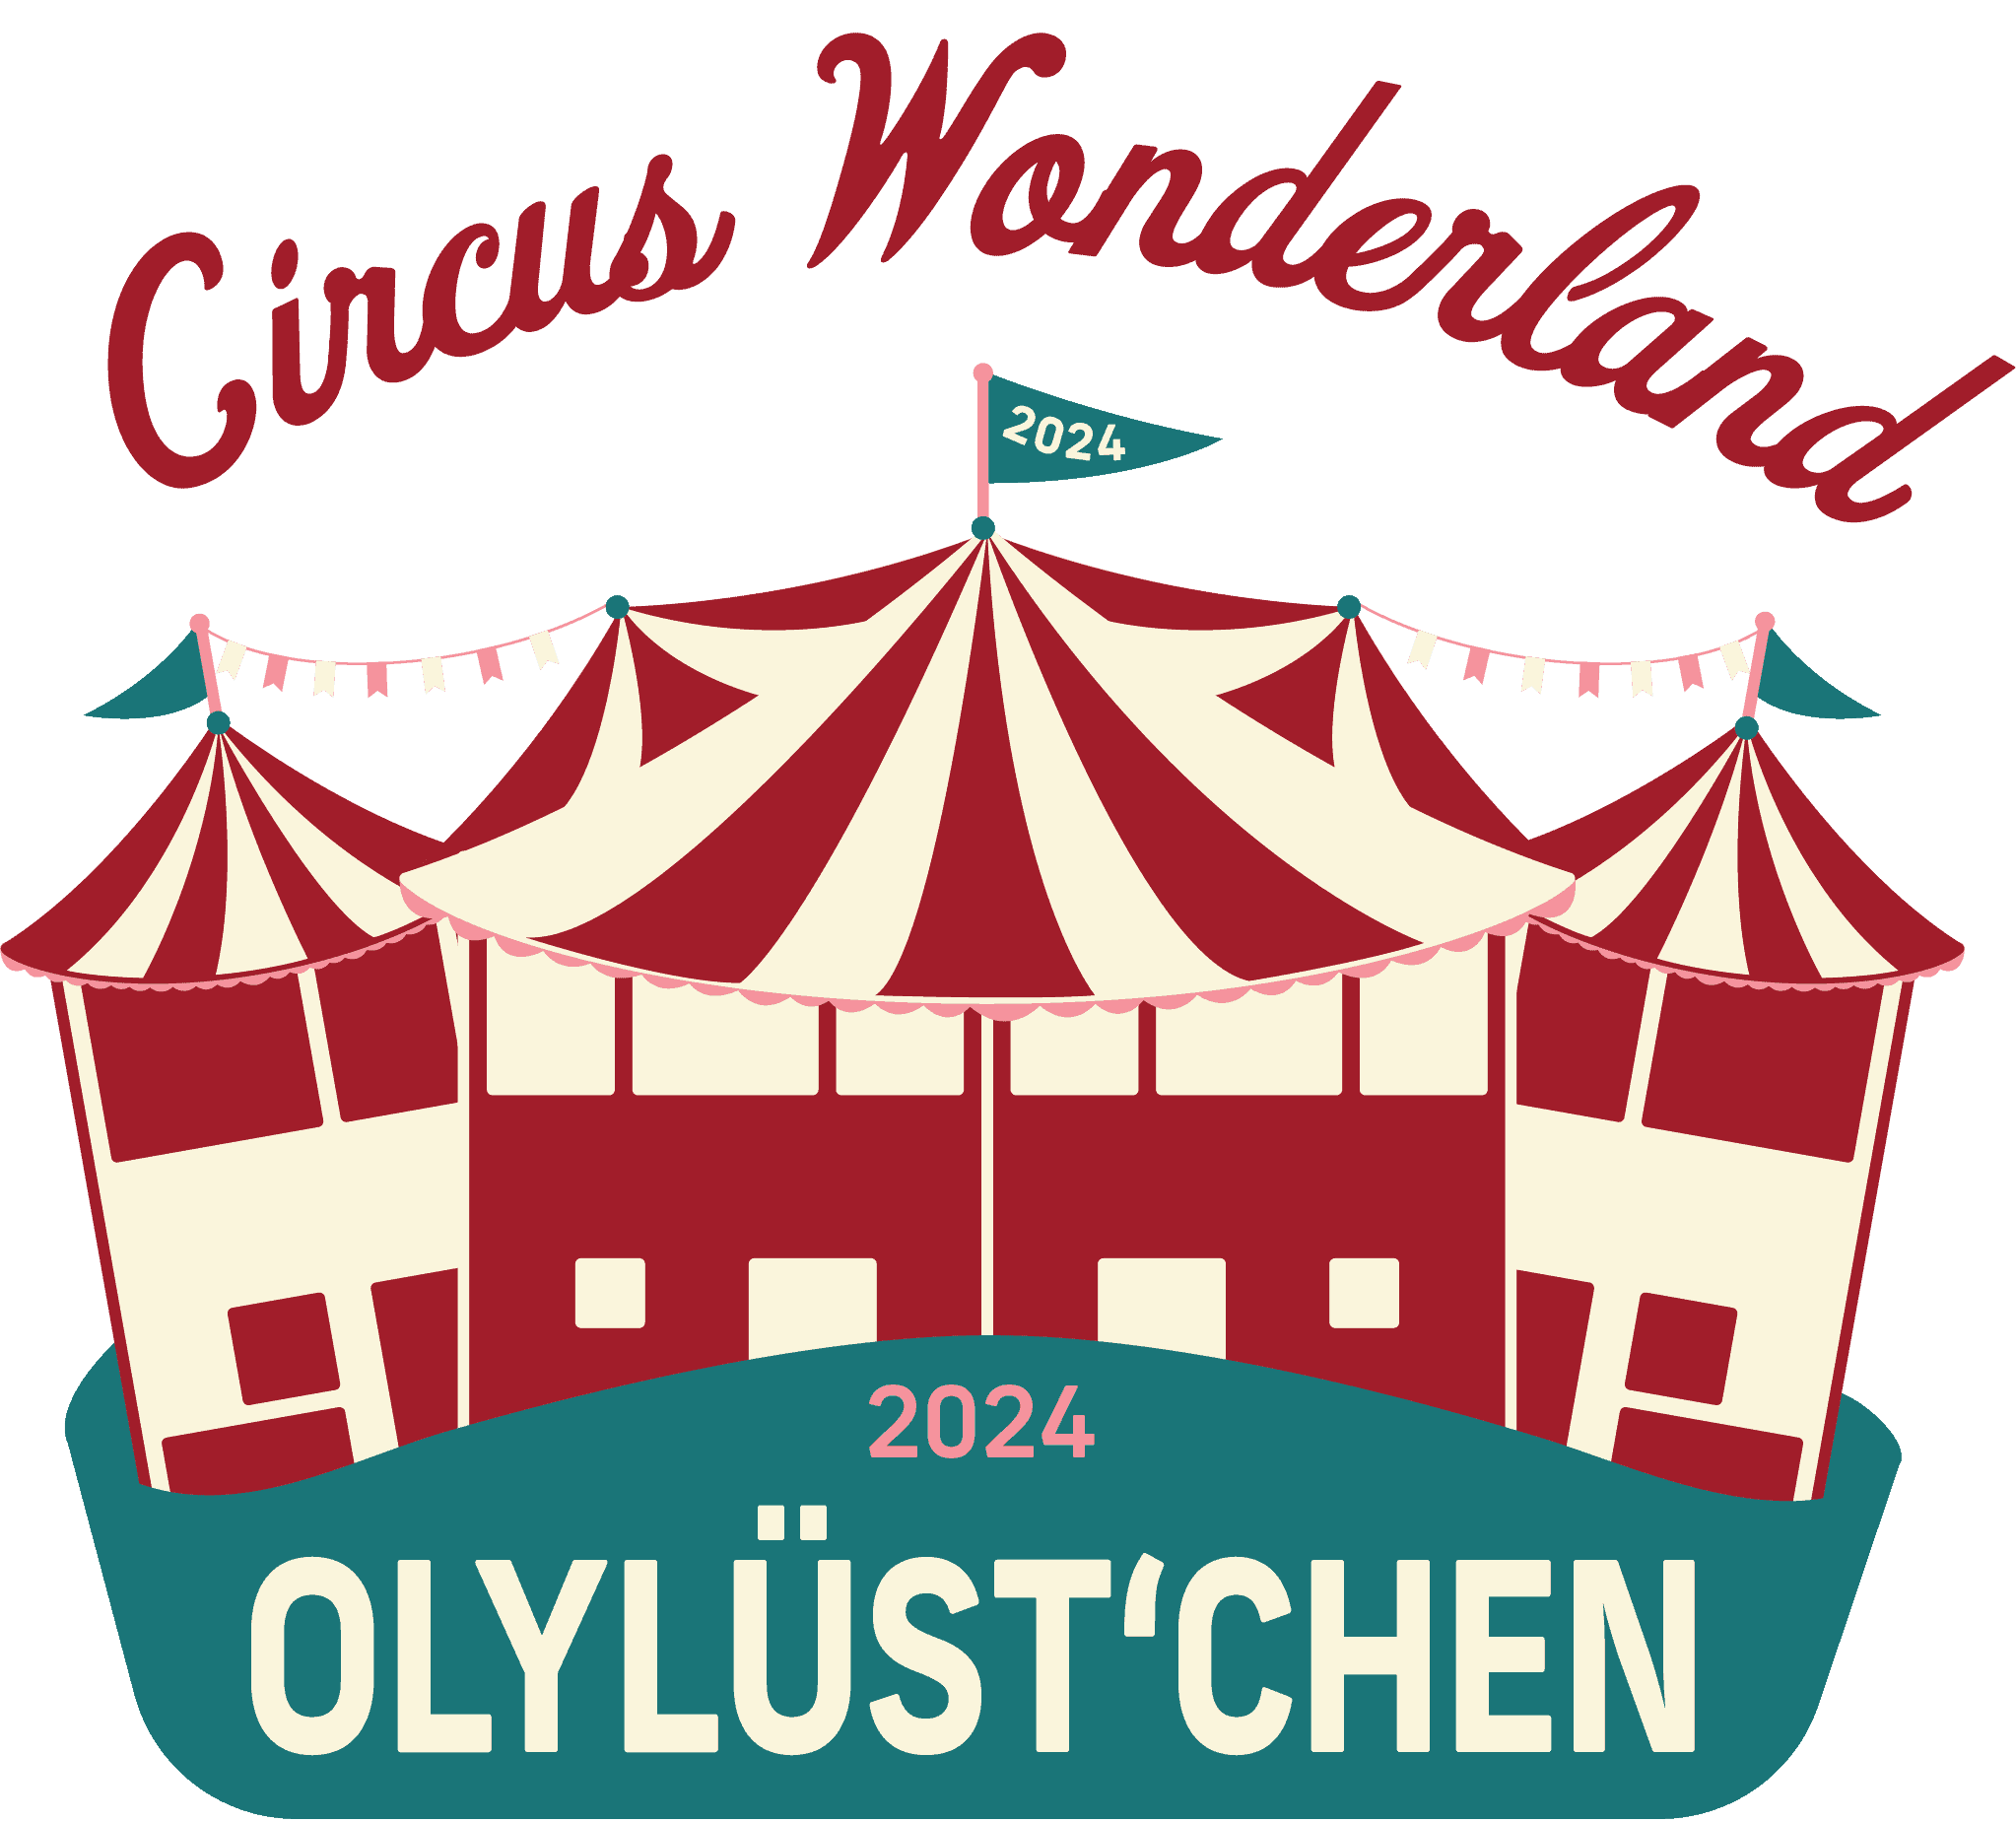 OlyLust